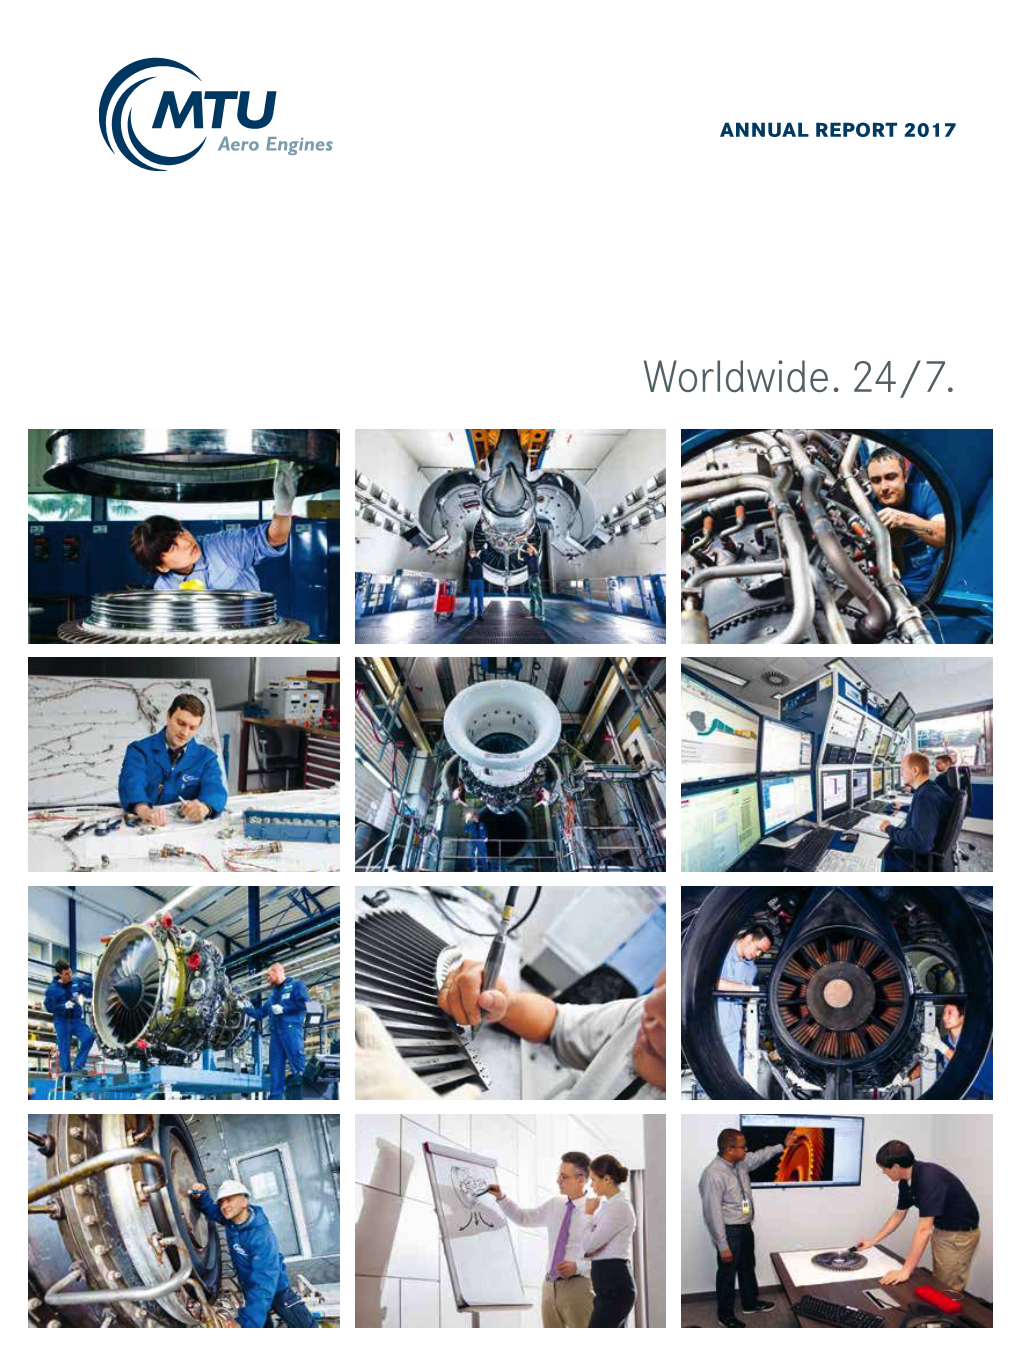 Annual Report 2017 MTU Aero Engines Worldwide